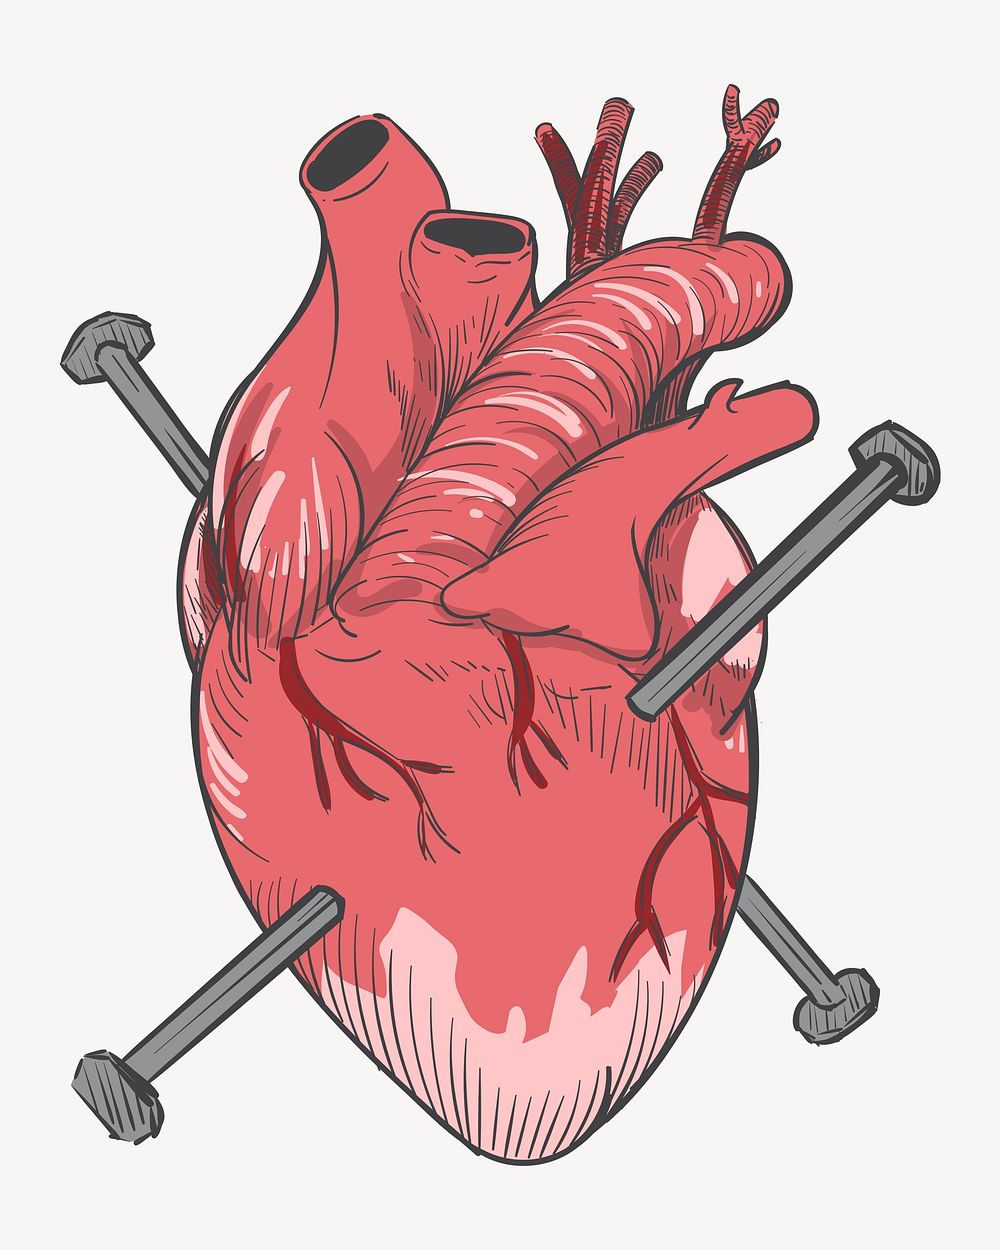 Nailed heart, abstract heartbreak illustration psd